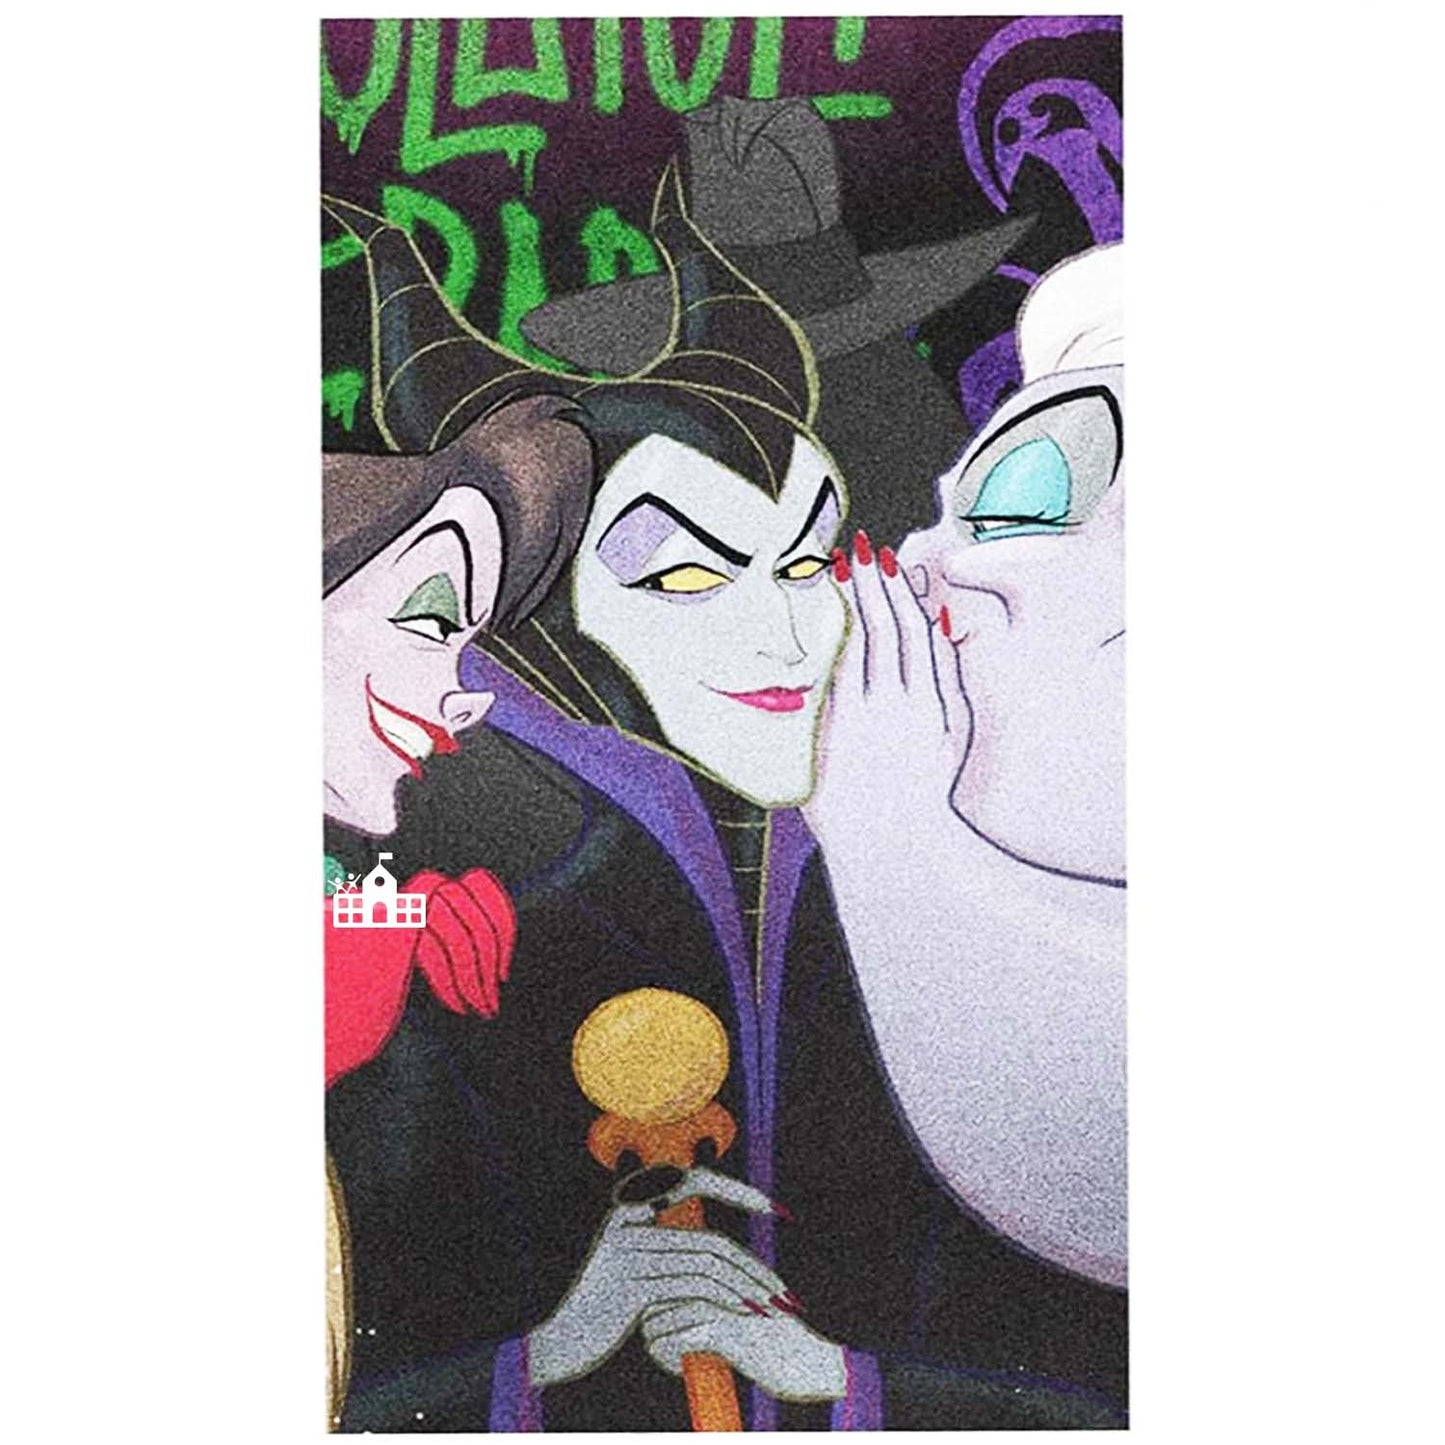 Disney Villains Beach Towel 27 x 54 inches - Ursula, Maleficent, Cruella Deville